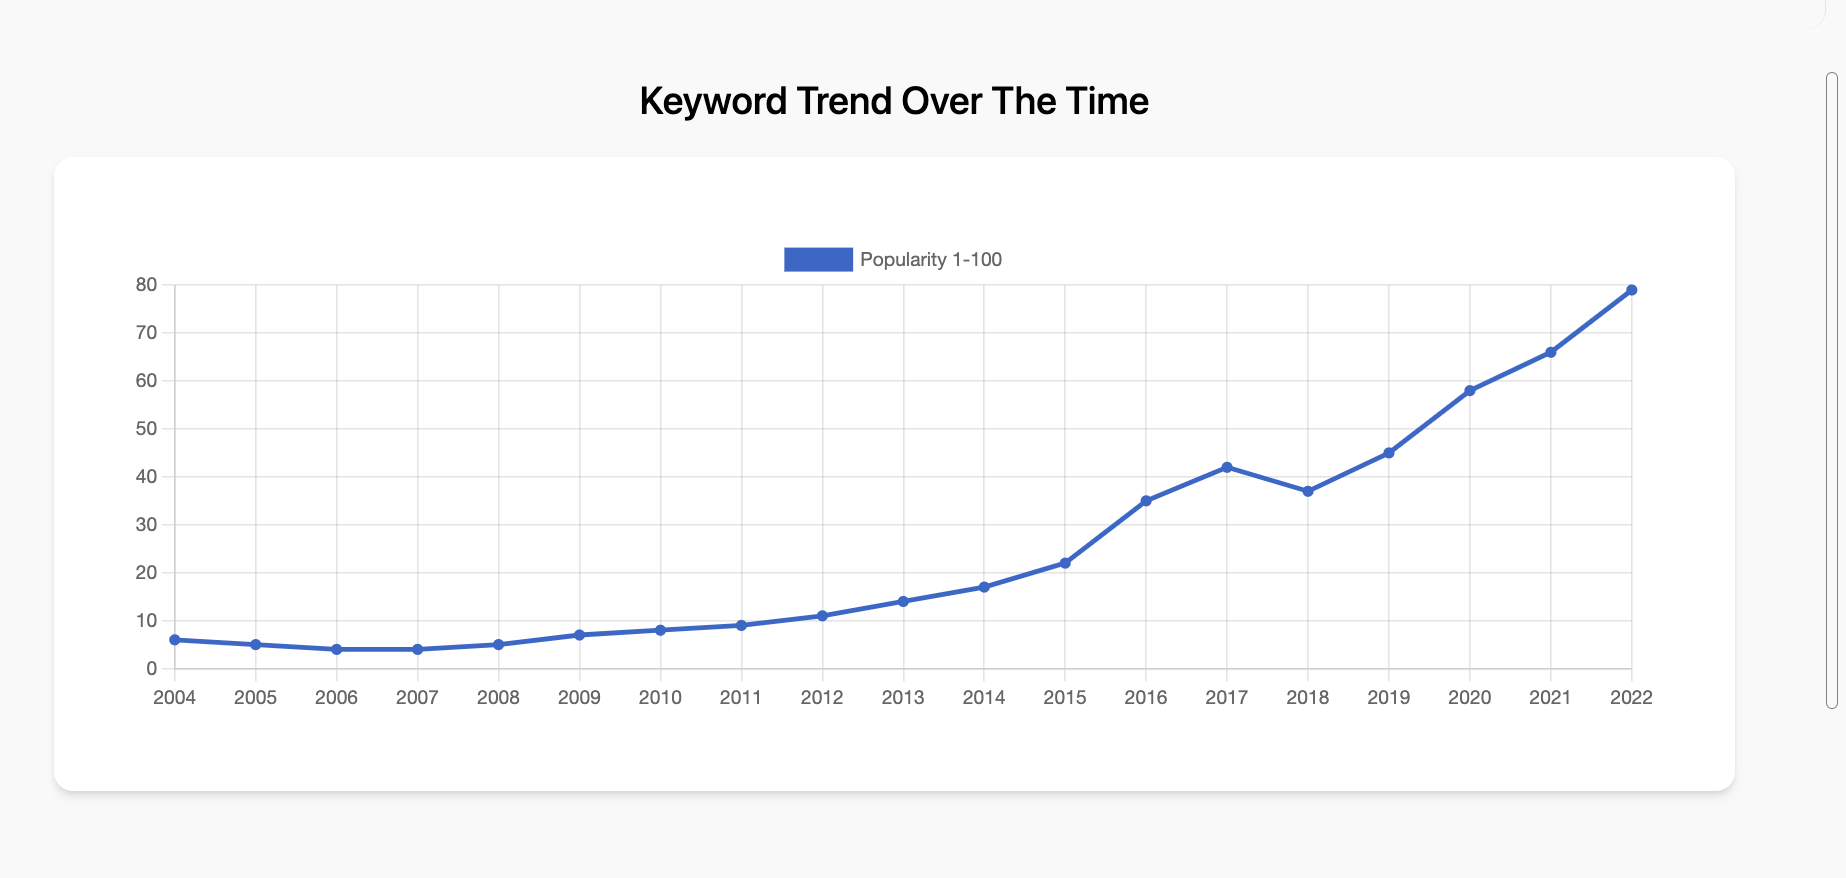 "Digital Marketing" popularity since 2004